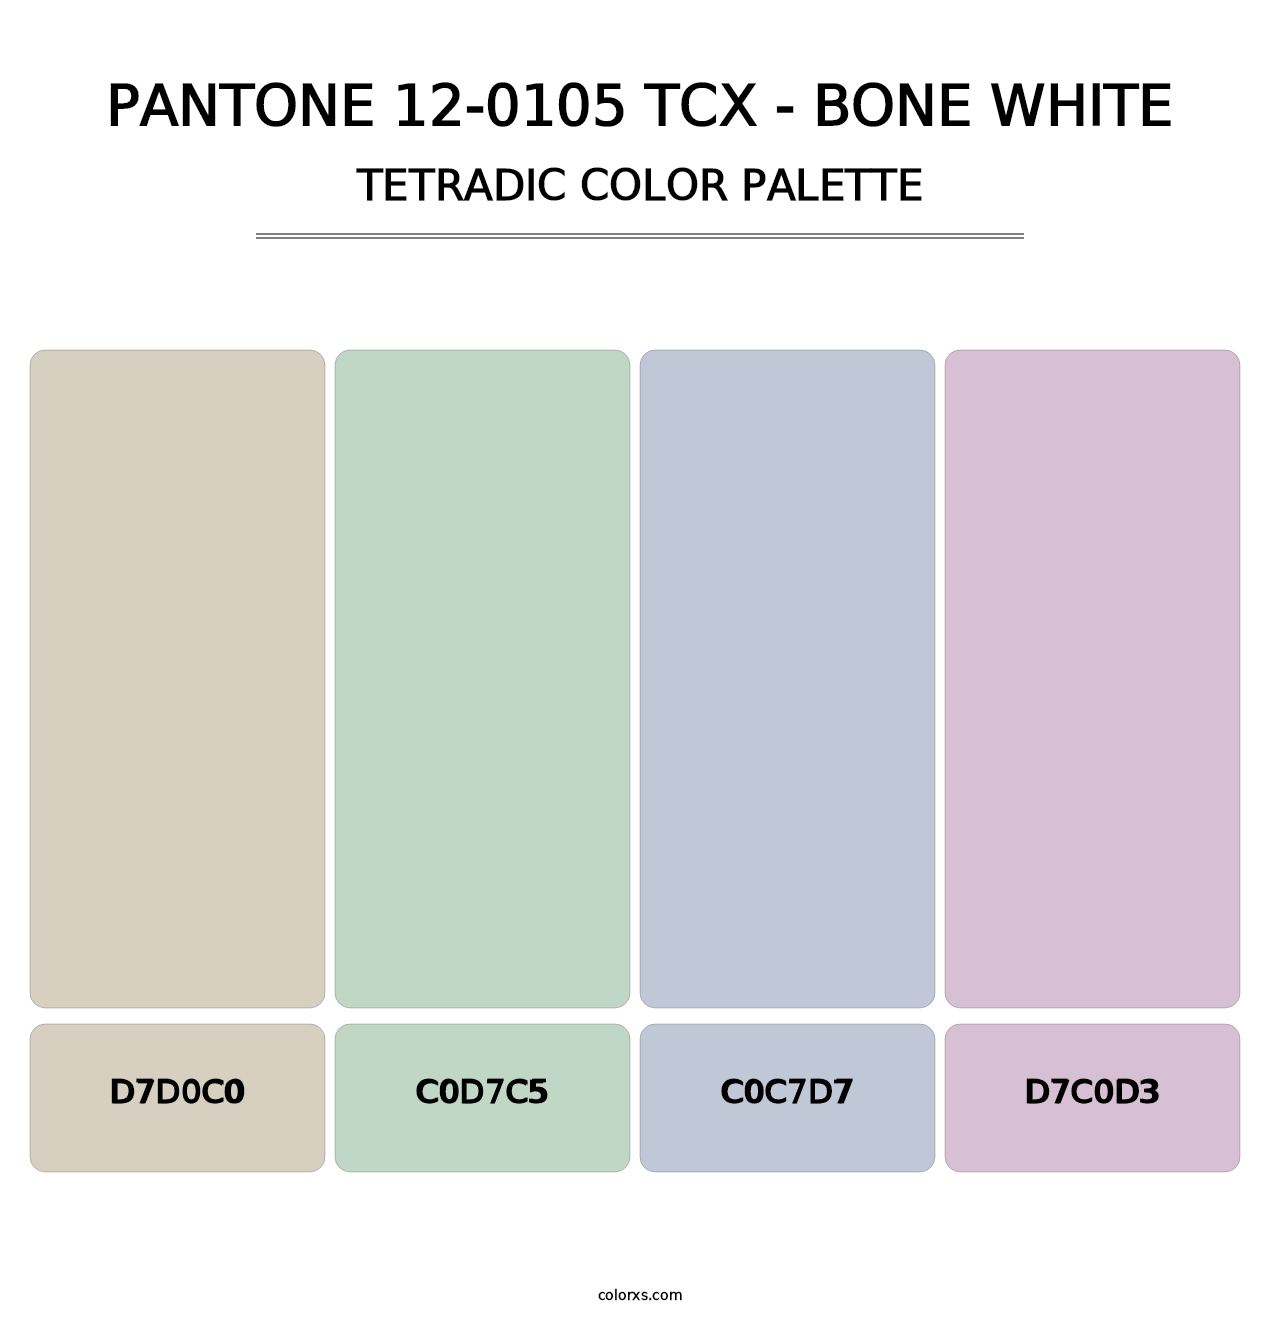 PANTONE 12-0105 TCX - Bone White - Tetradic Color Palette